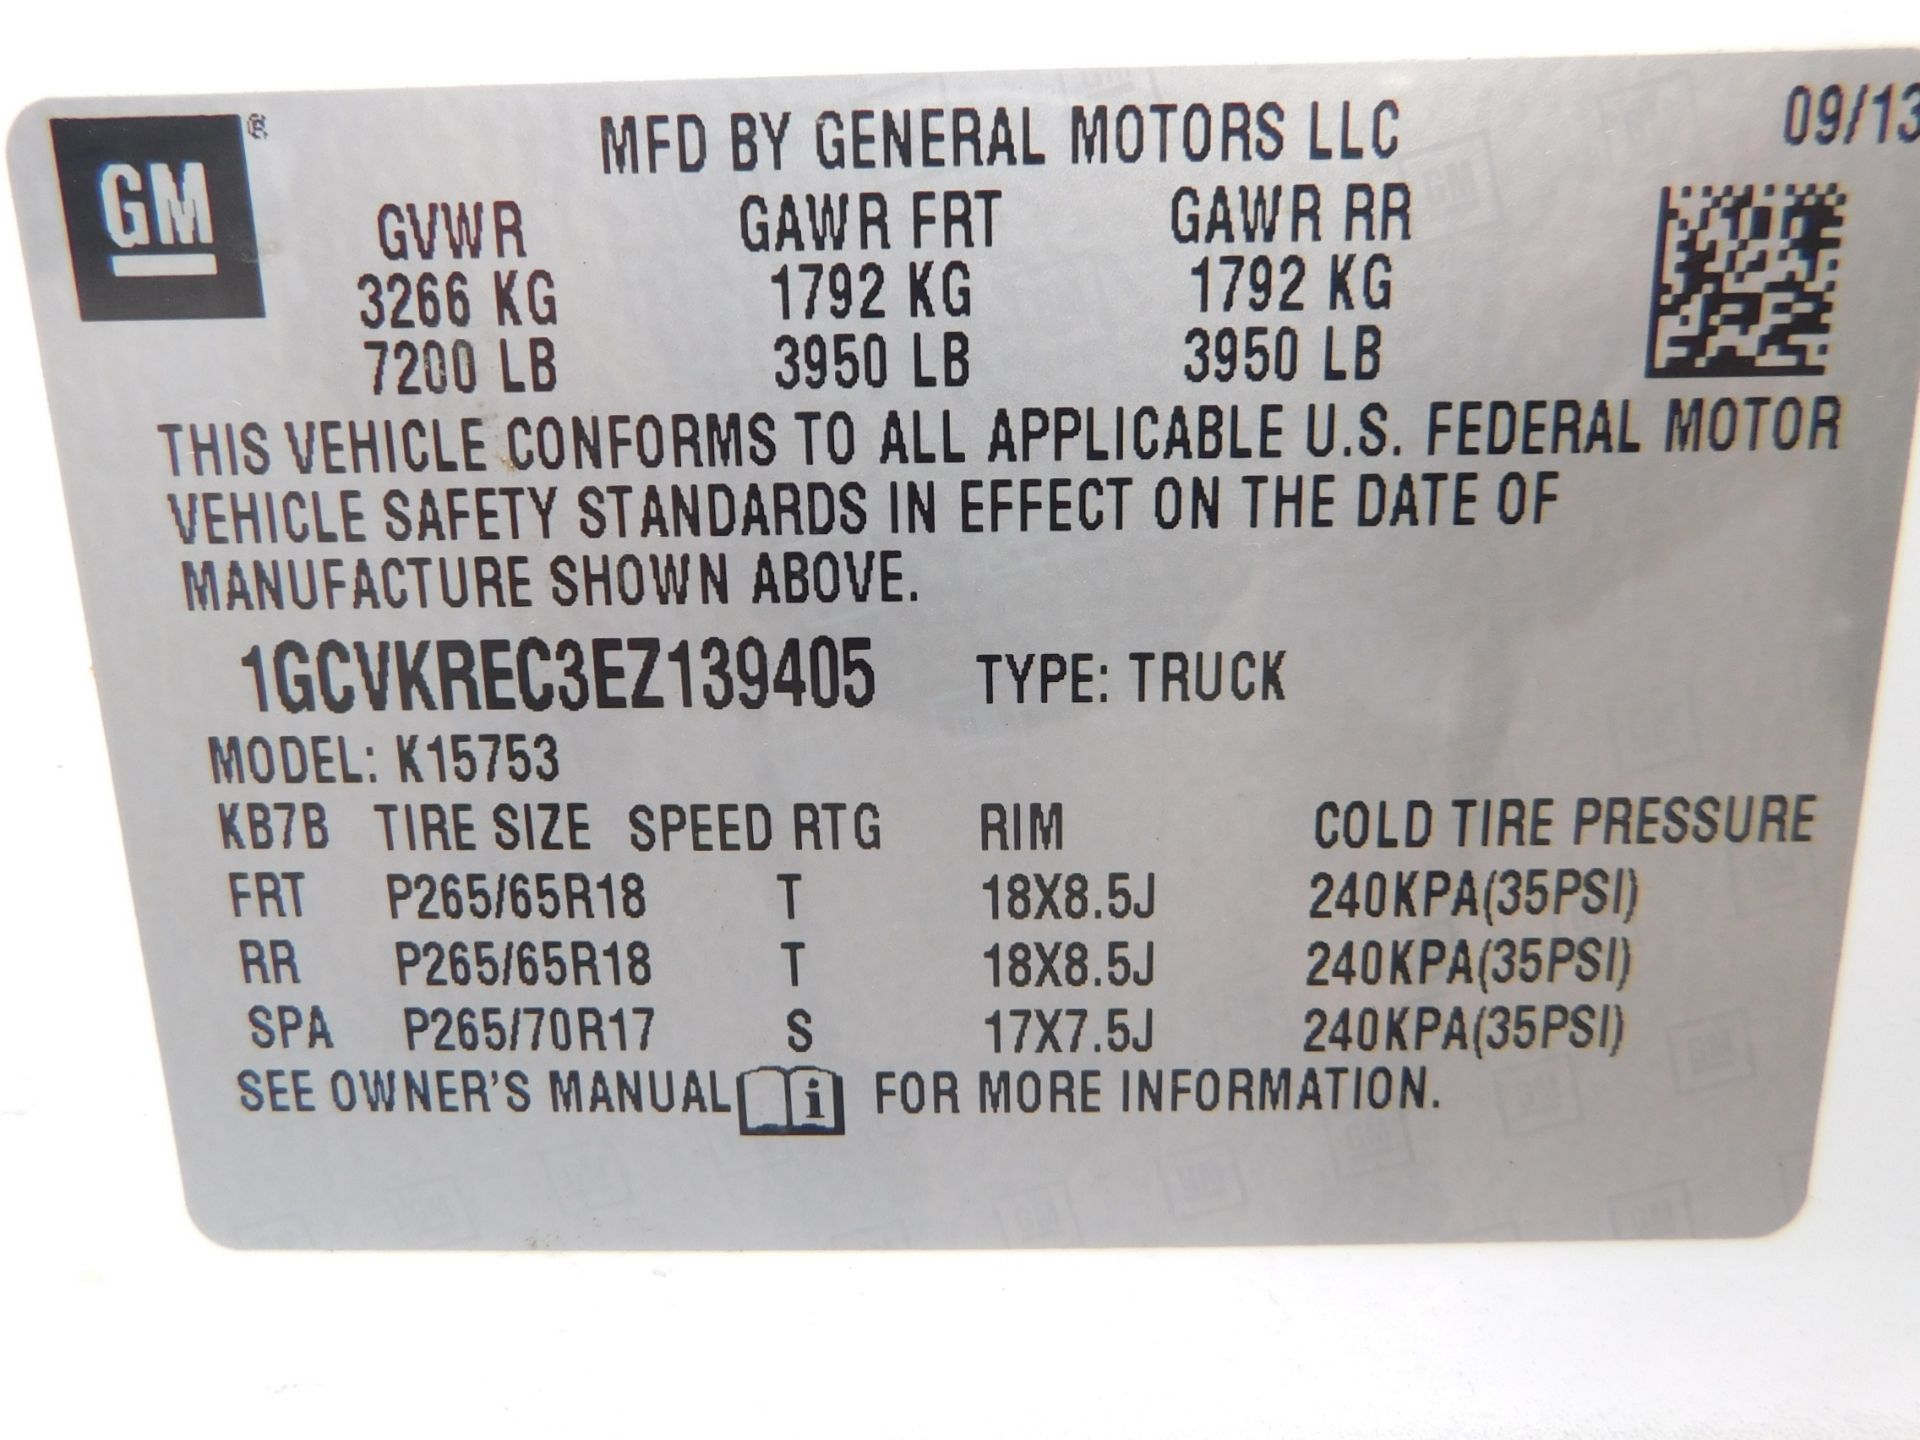 2014 Chevrolet Silverado LT Pickup, VIN 1GCVKREC3EZ139405, 4-Door 4 WD, Automatic, AM/FM, AC, Cruise - Image 21 of 51